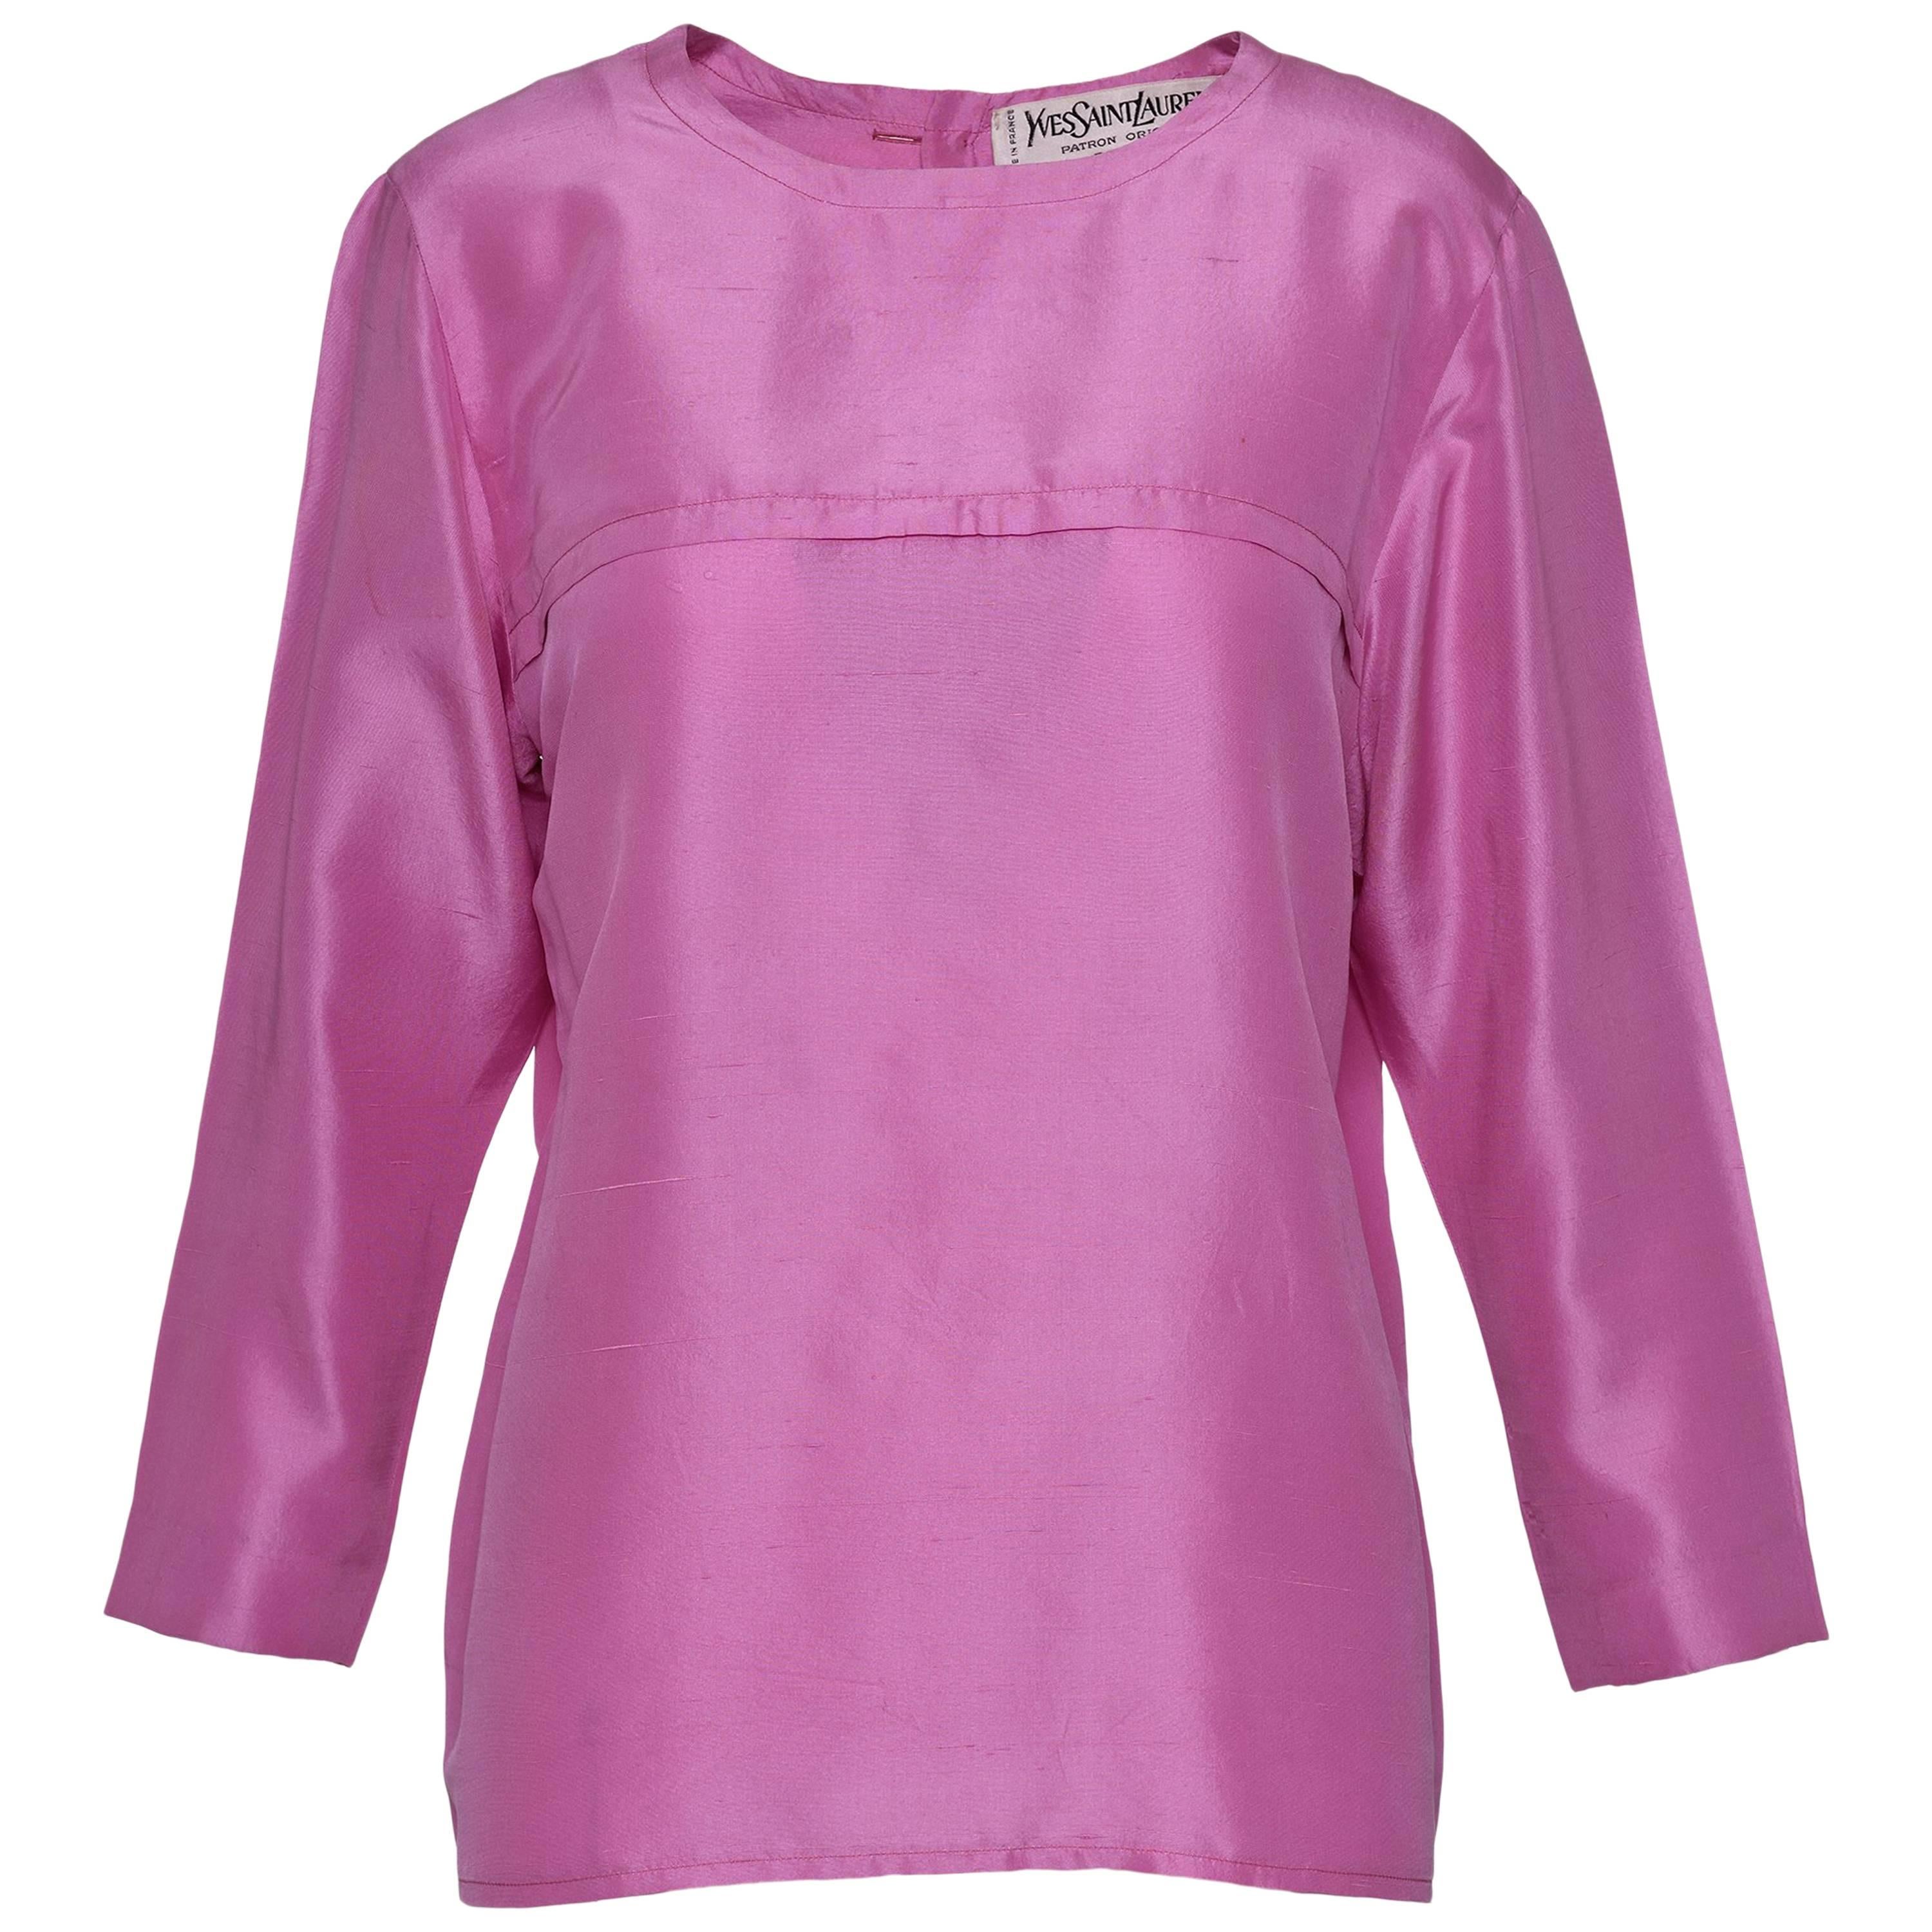 1980s YVES SAINT LAURENT Patron Original Pink Shantung Blouse Shirt